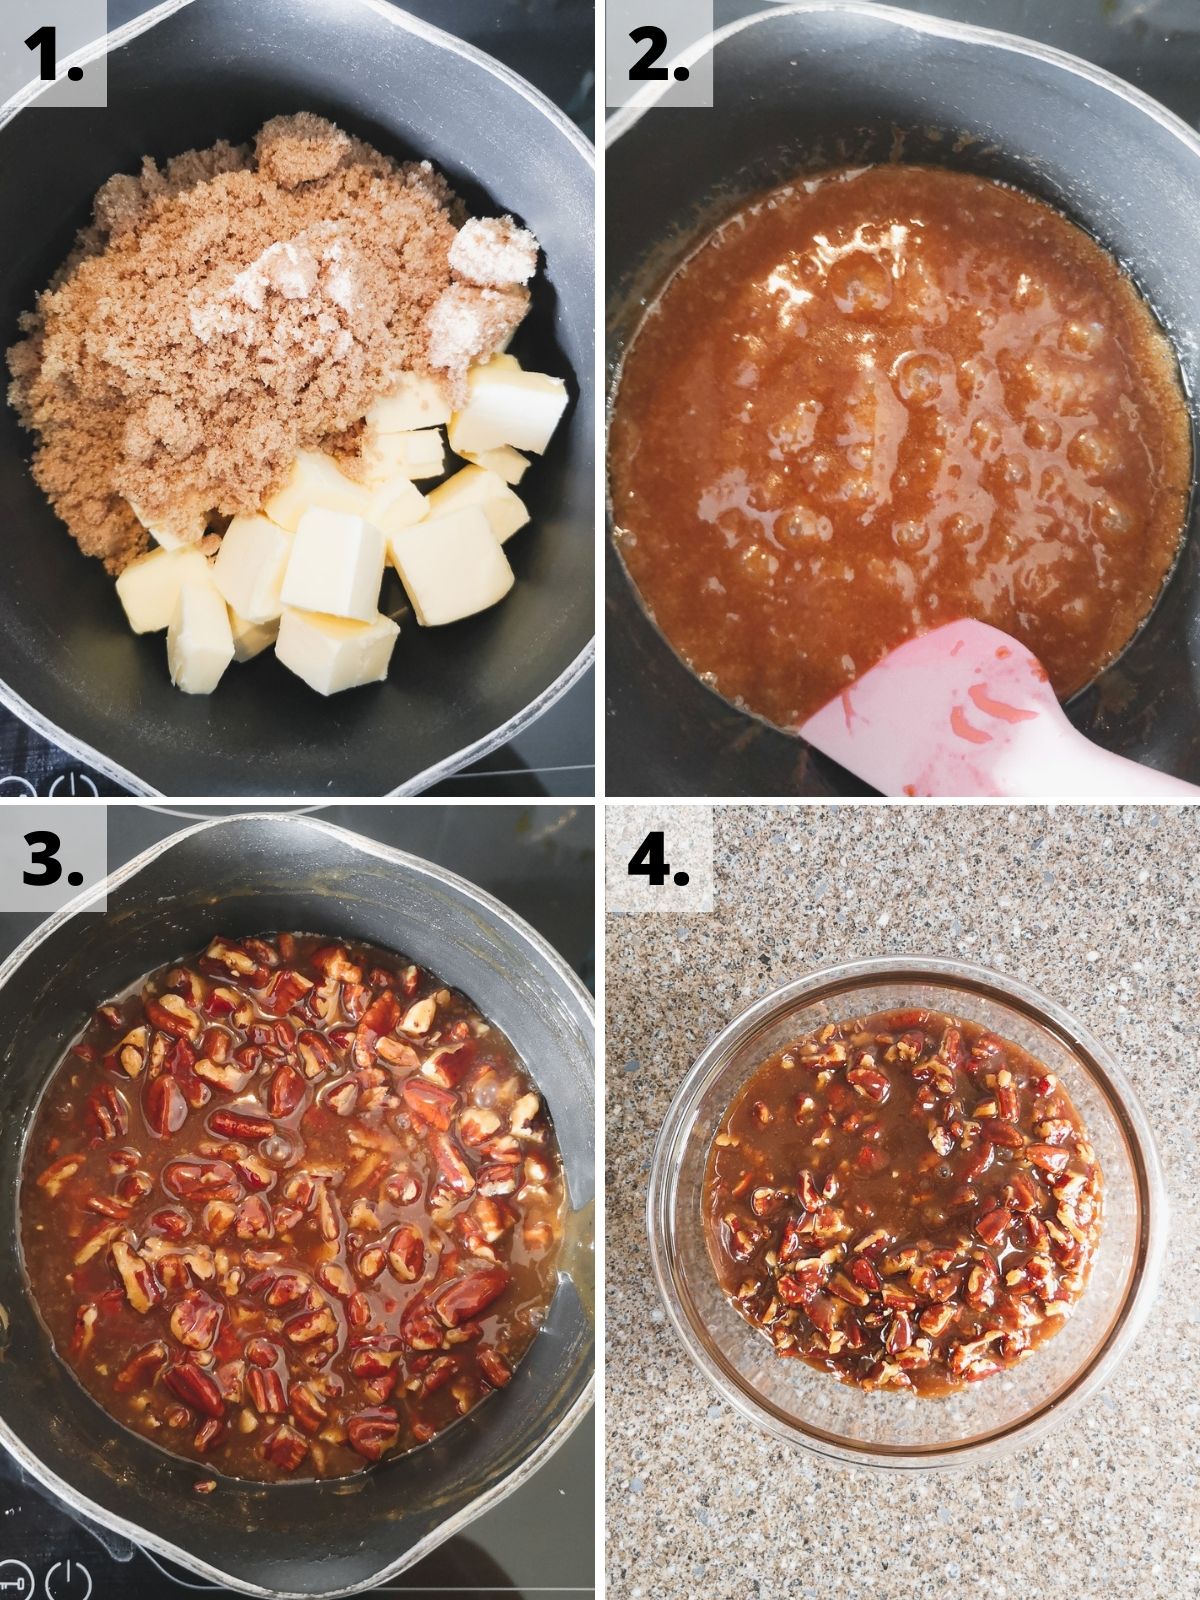 Pumpkin pecan cheesecake recipe method topping steps 1-4